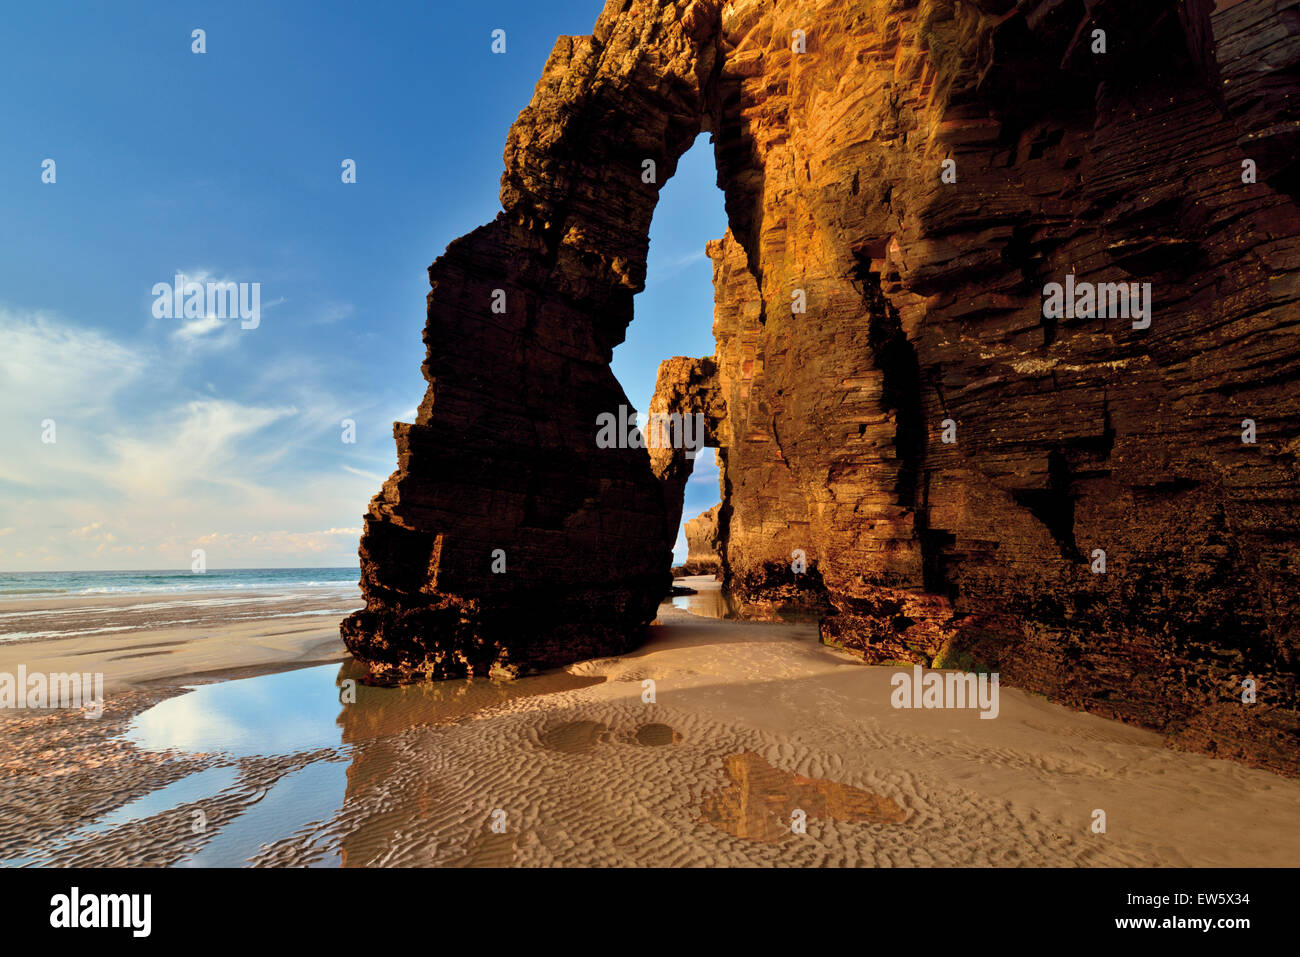 España, Galicia: impresionante arco en la Catedral de roca (playa Praia como Catedrais) Foto de stock